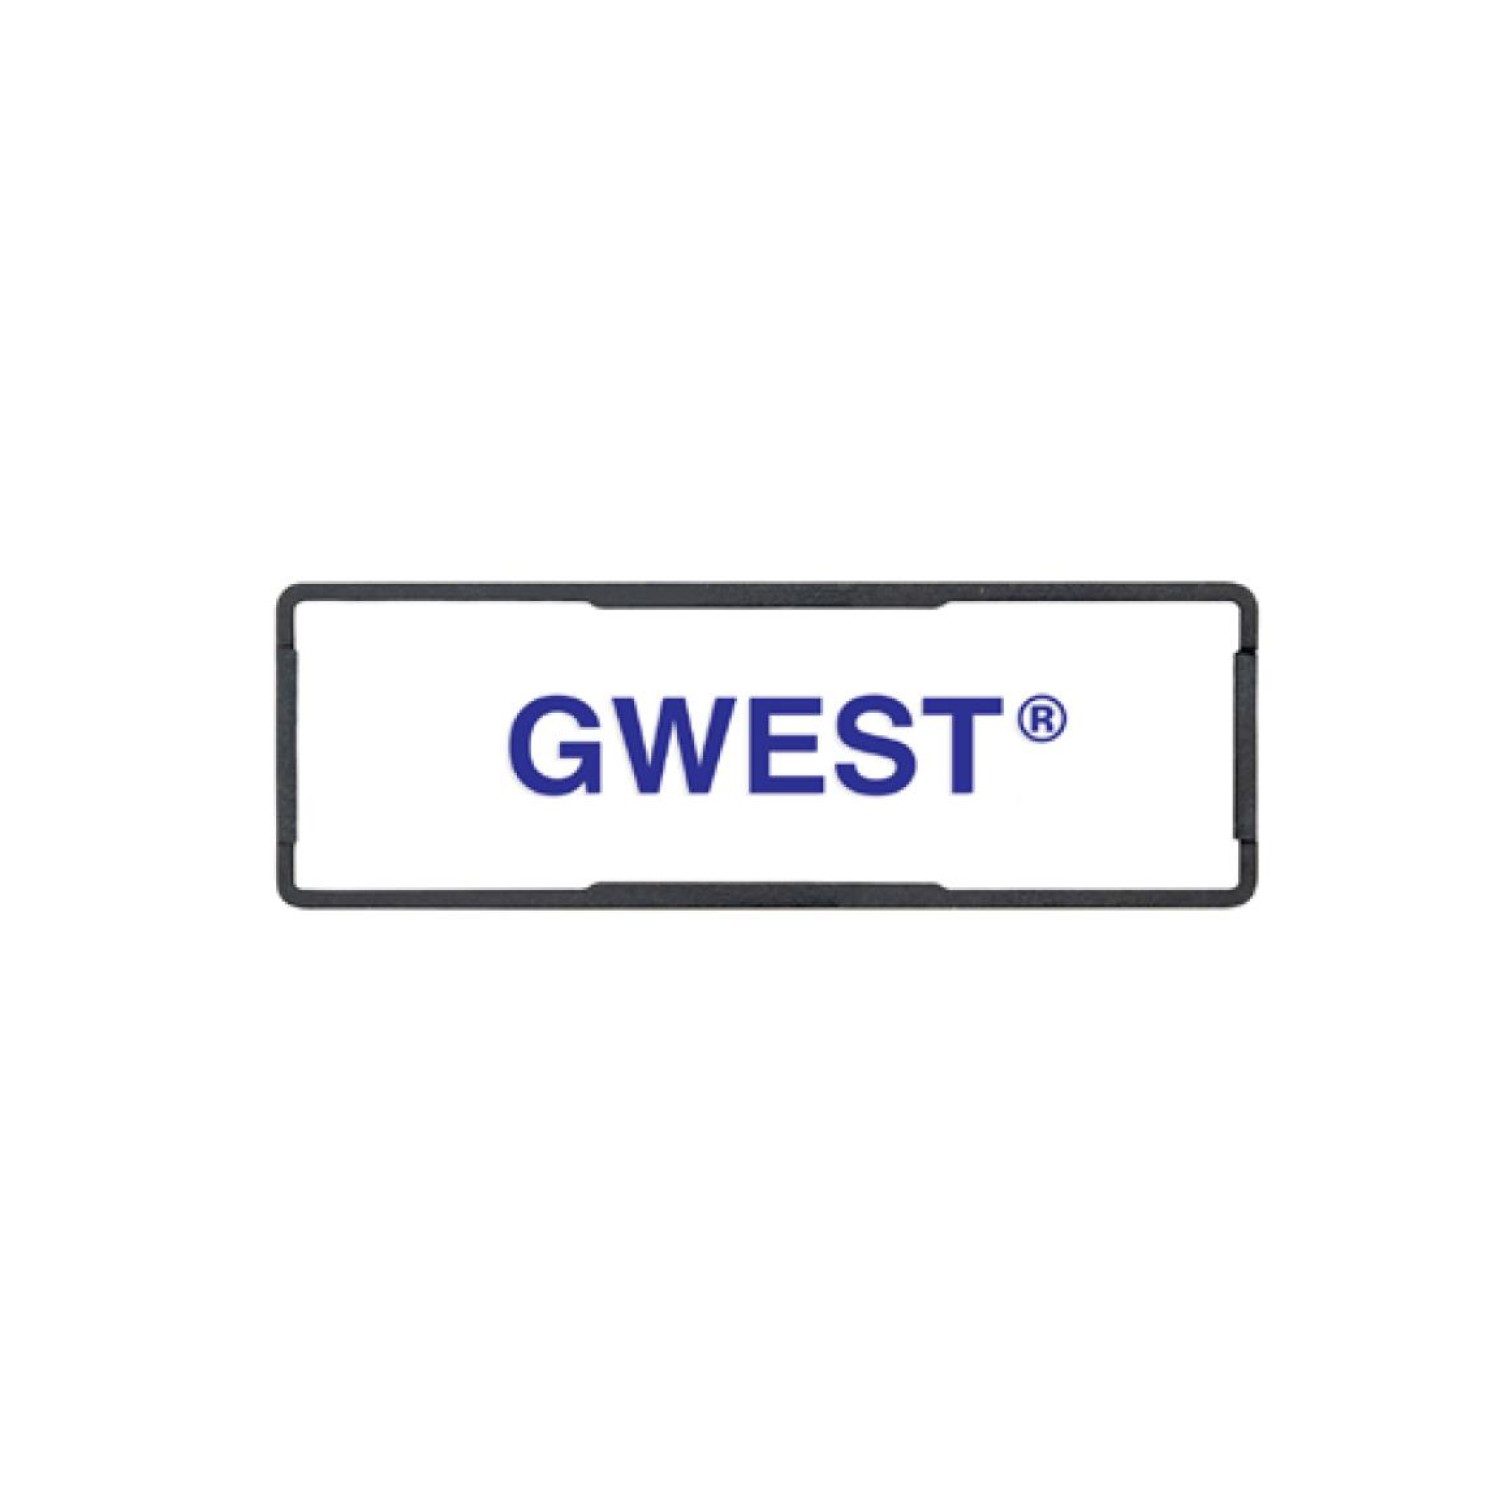 Gwest Pano Etiketi - GPET 1 - 5 Adet